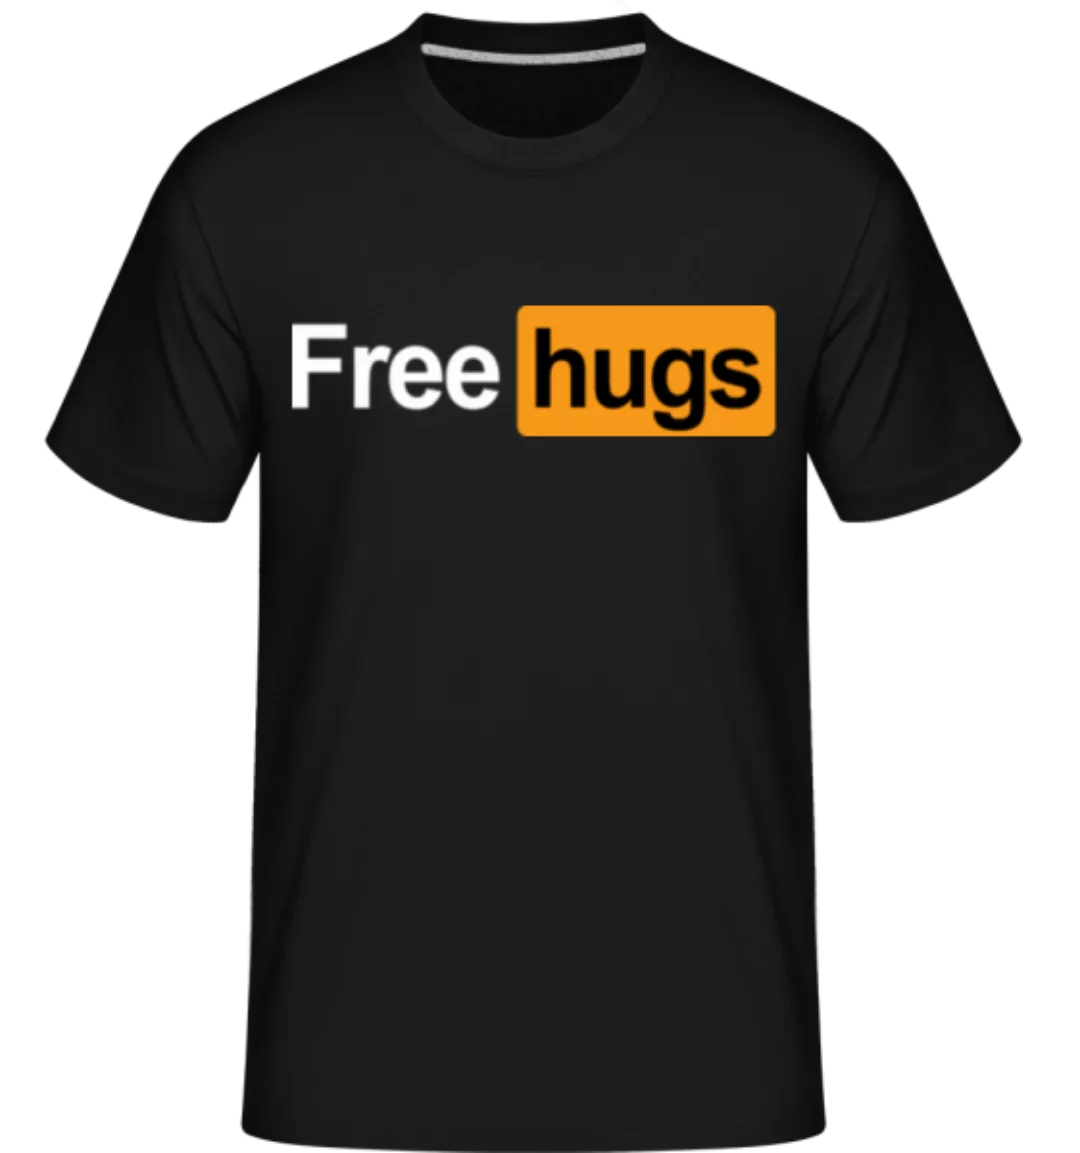 Free Hugs · Shirtinator Männer T-Shirt günstig online kaufen